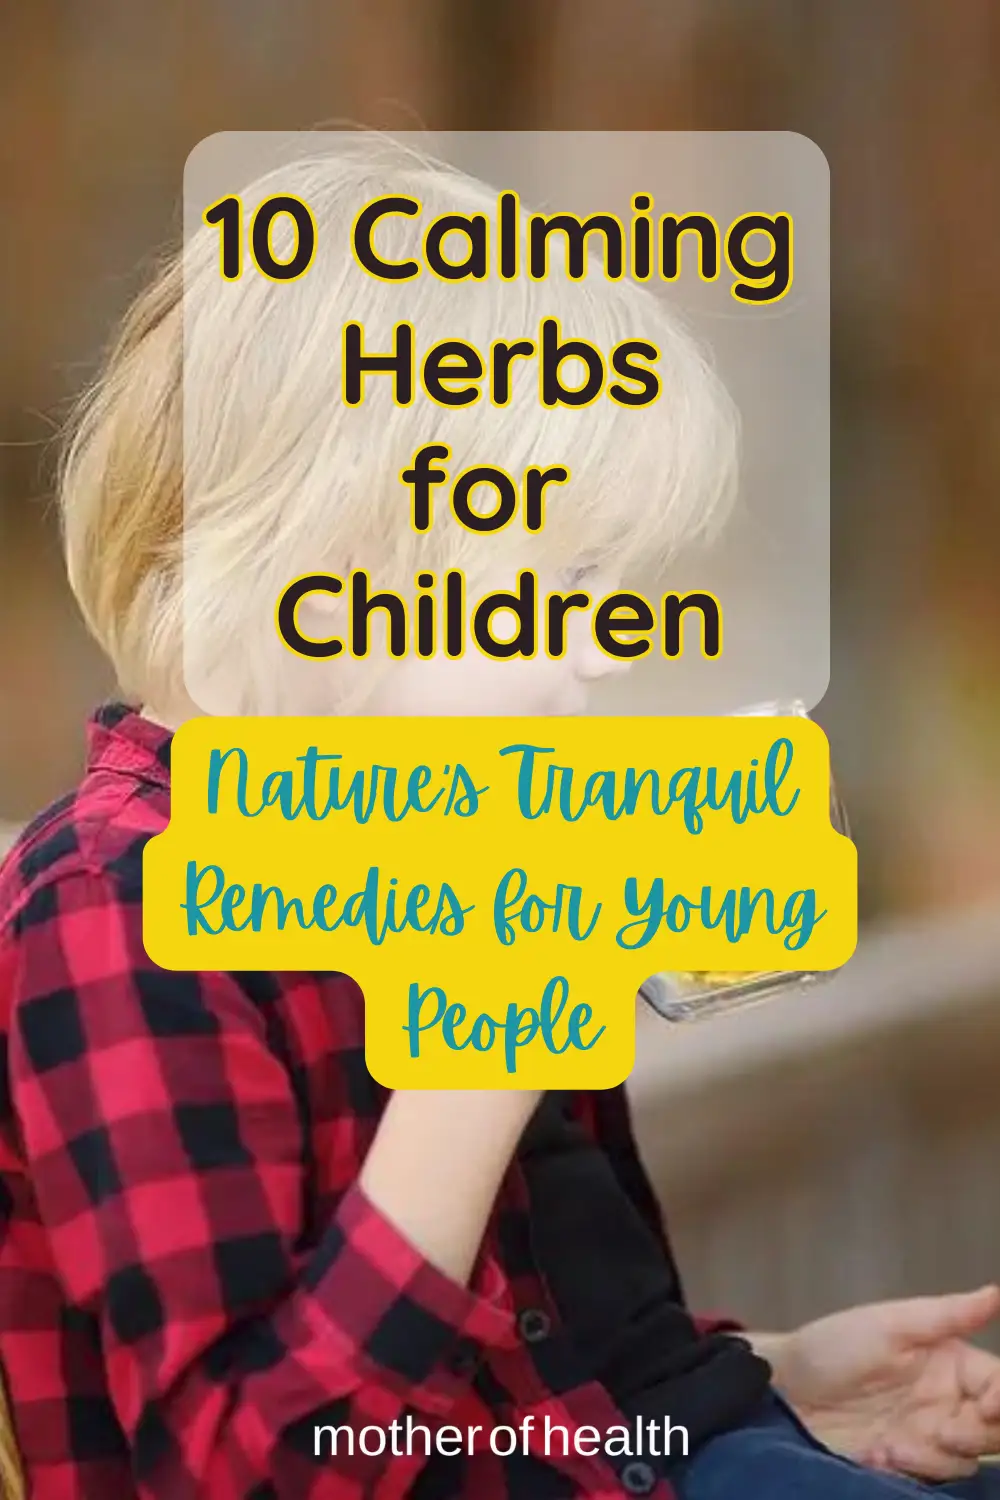 calming herbs for children pinterest pin (image)